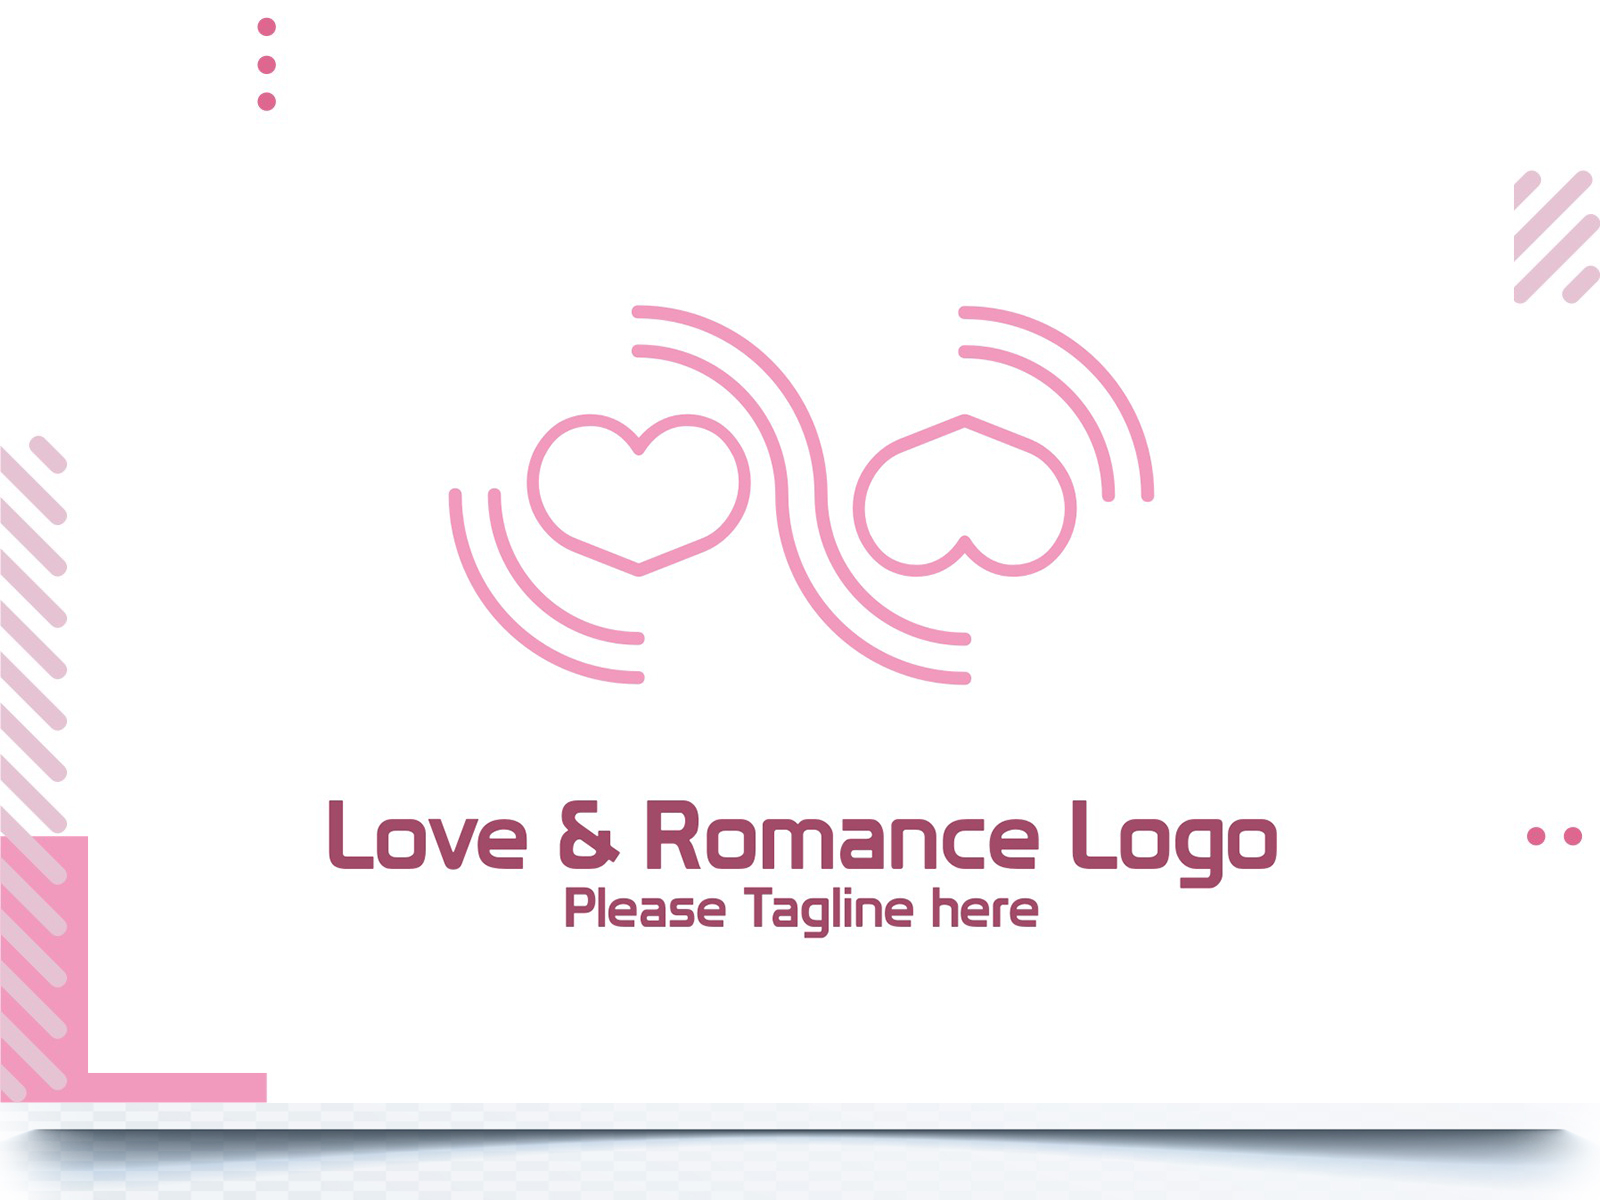 Download Free Love Romance Logo By Ferdinand Ak On Dribbble PSD Mockup Template